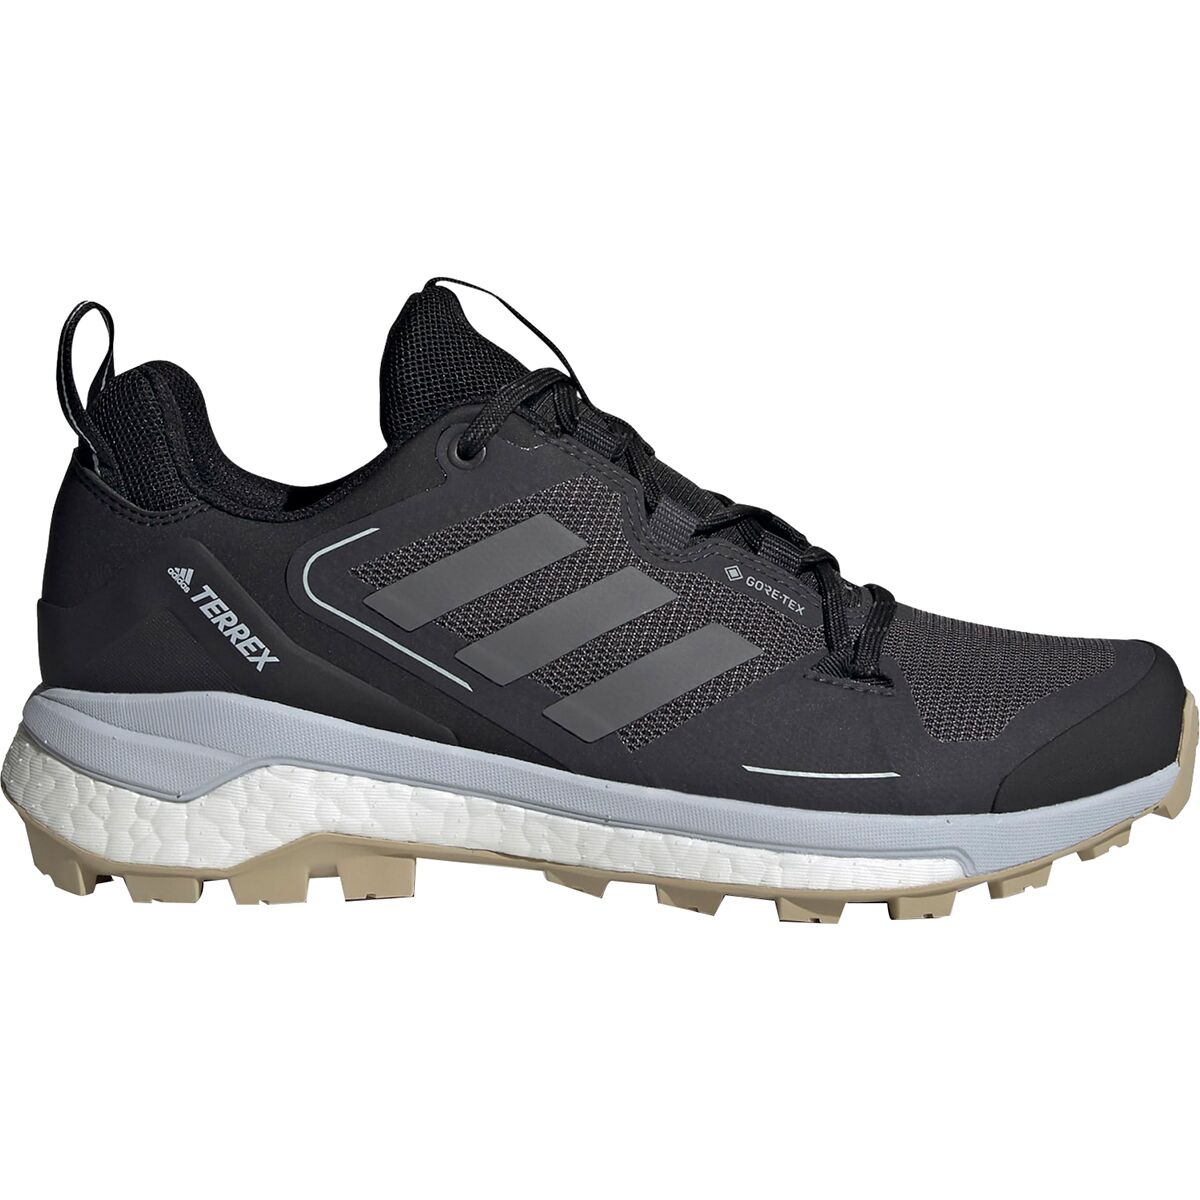 Adidas Outdoor Terrex Skychaser 2 GTX Hiking Shoe - Women's